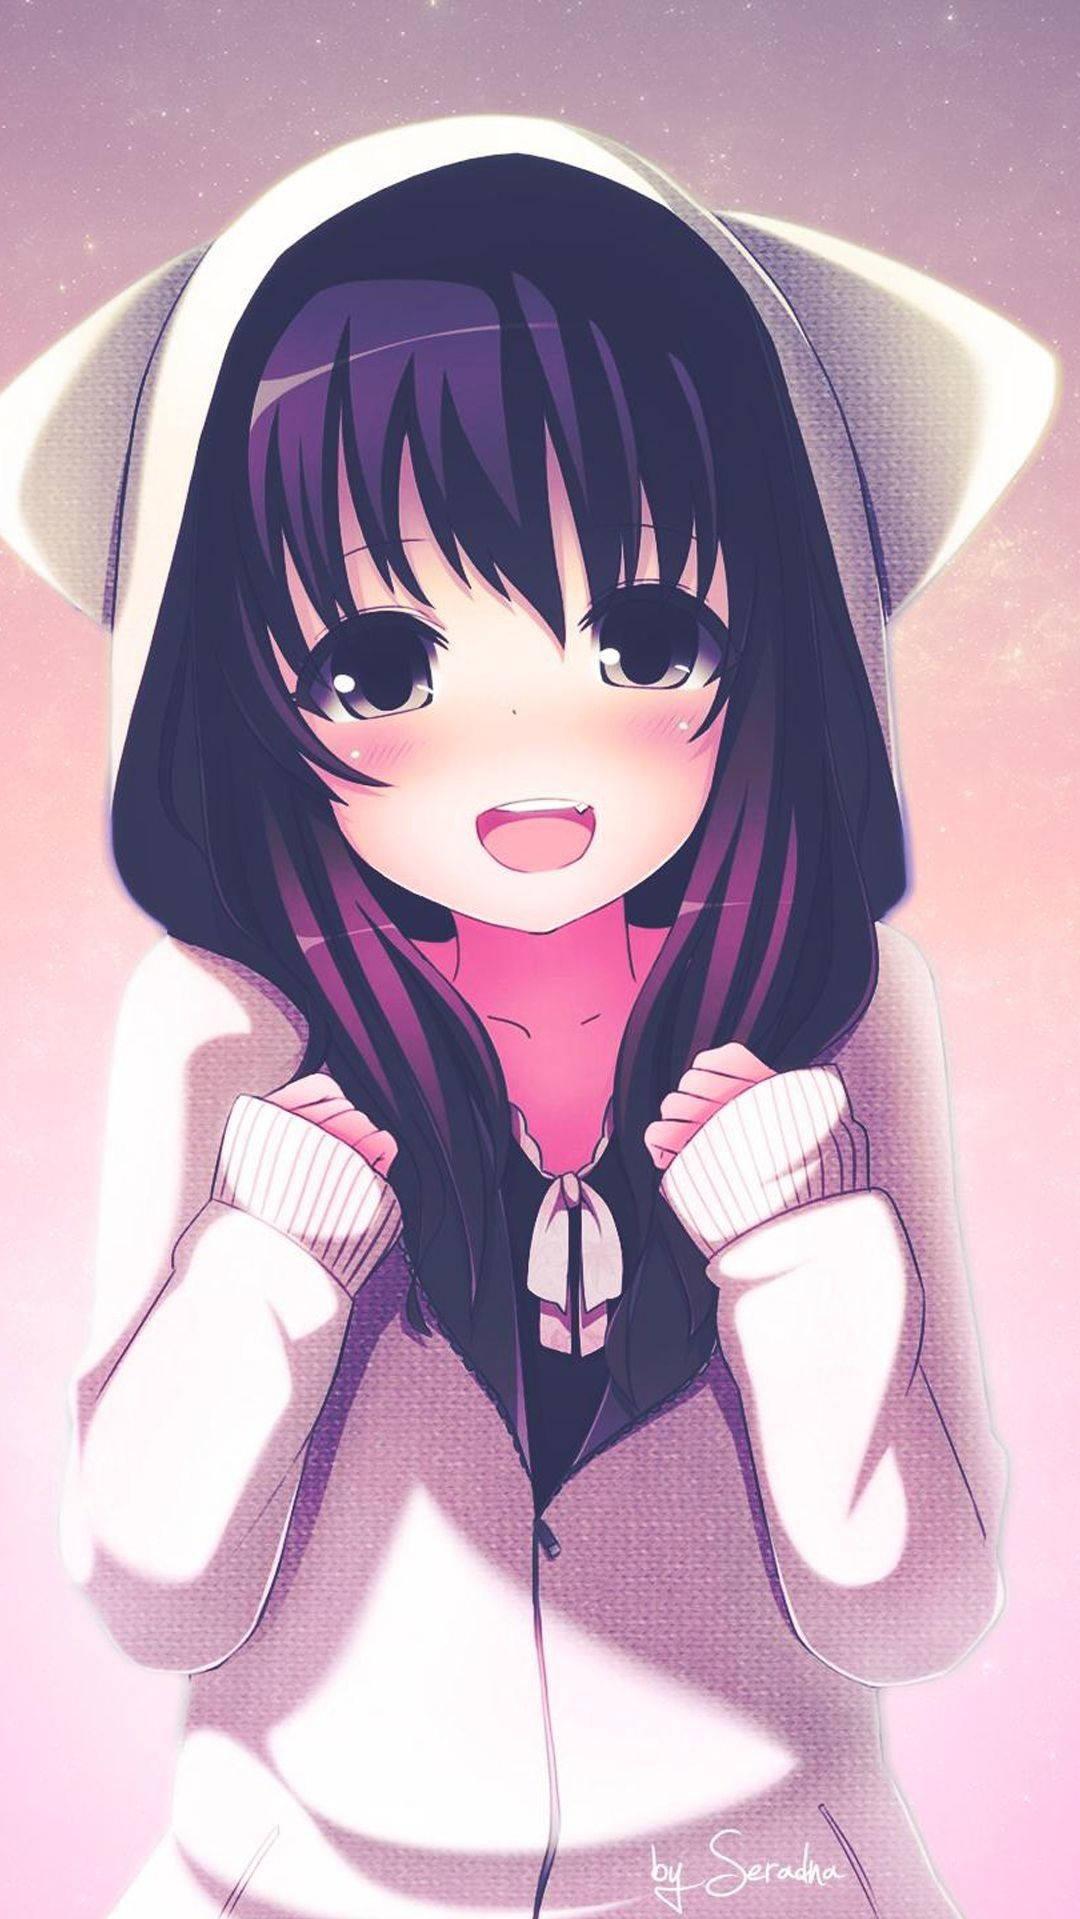 Cute Anime Girl iPhone Wallpaper